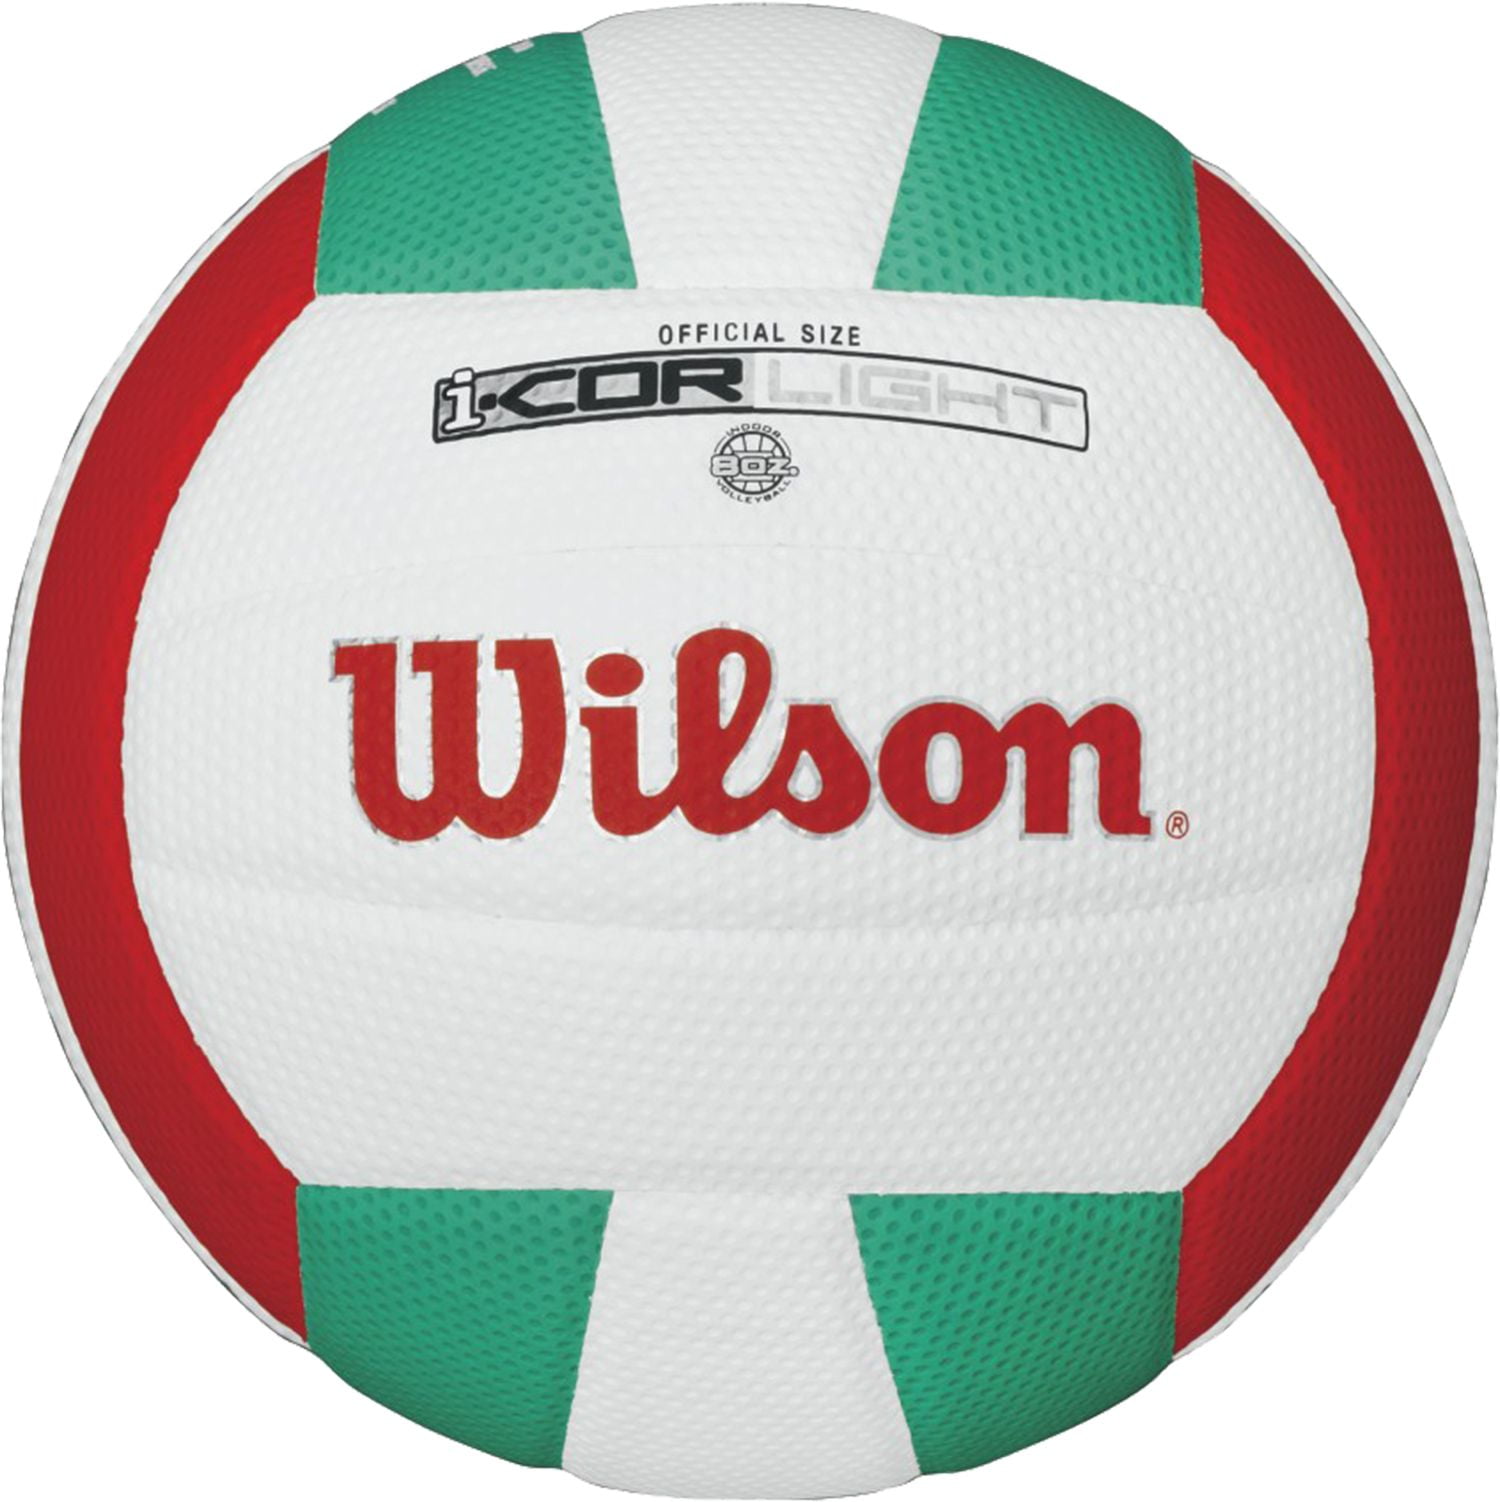 WILSON I-COR Light 8 oz Indoor Training VolleyballWTH7750NEW In Box 